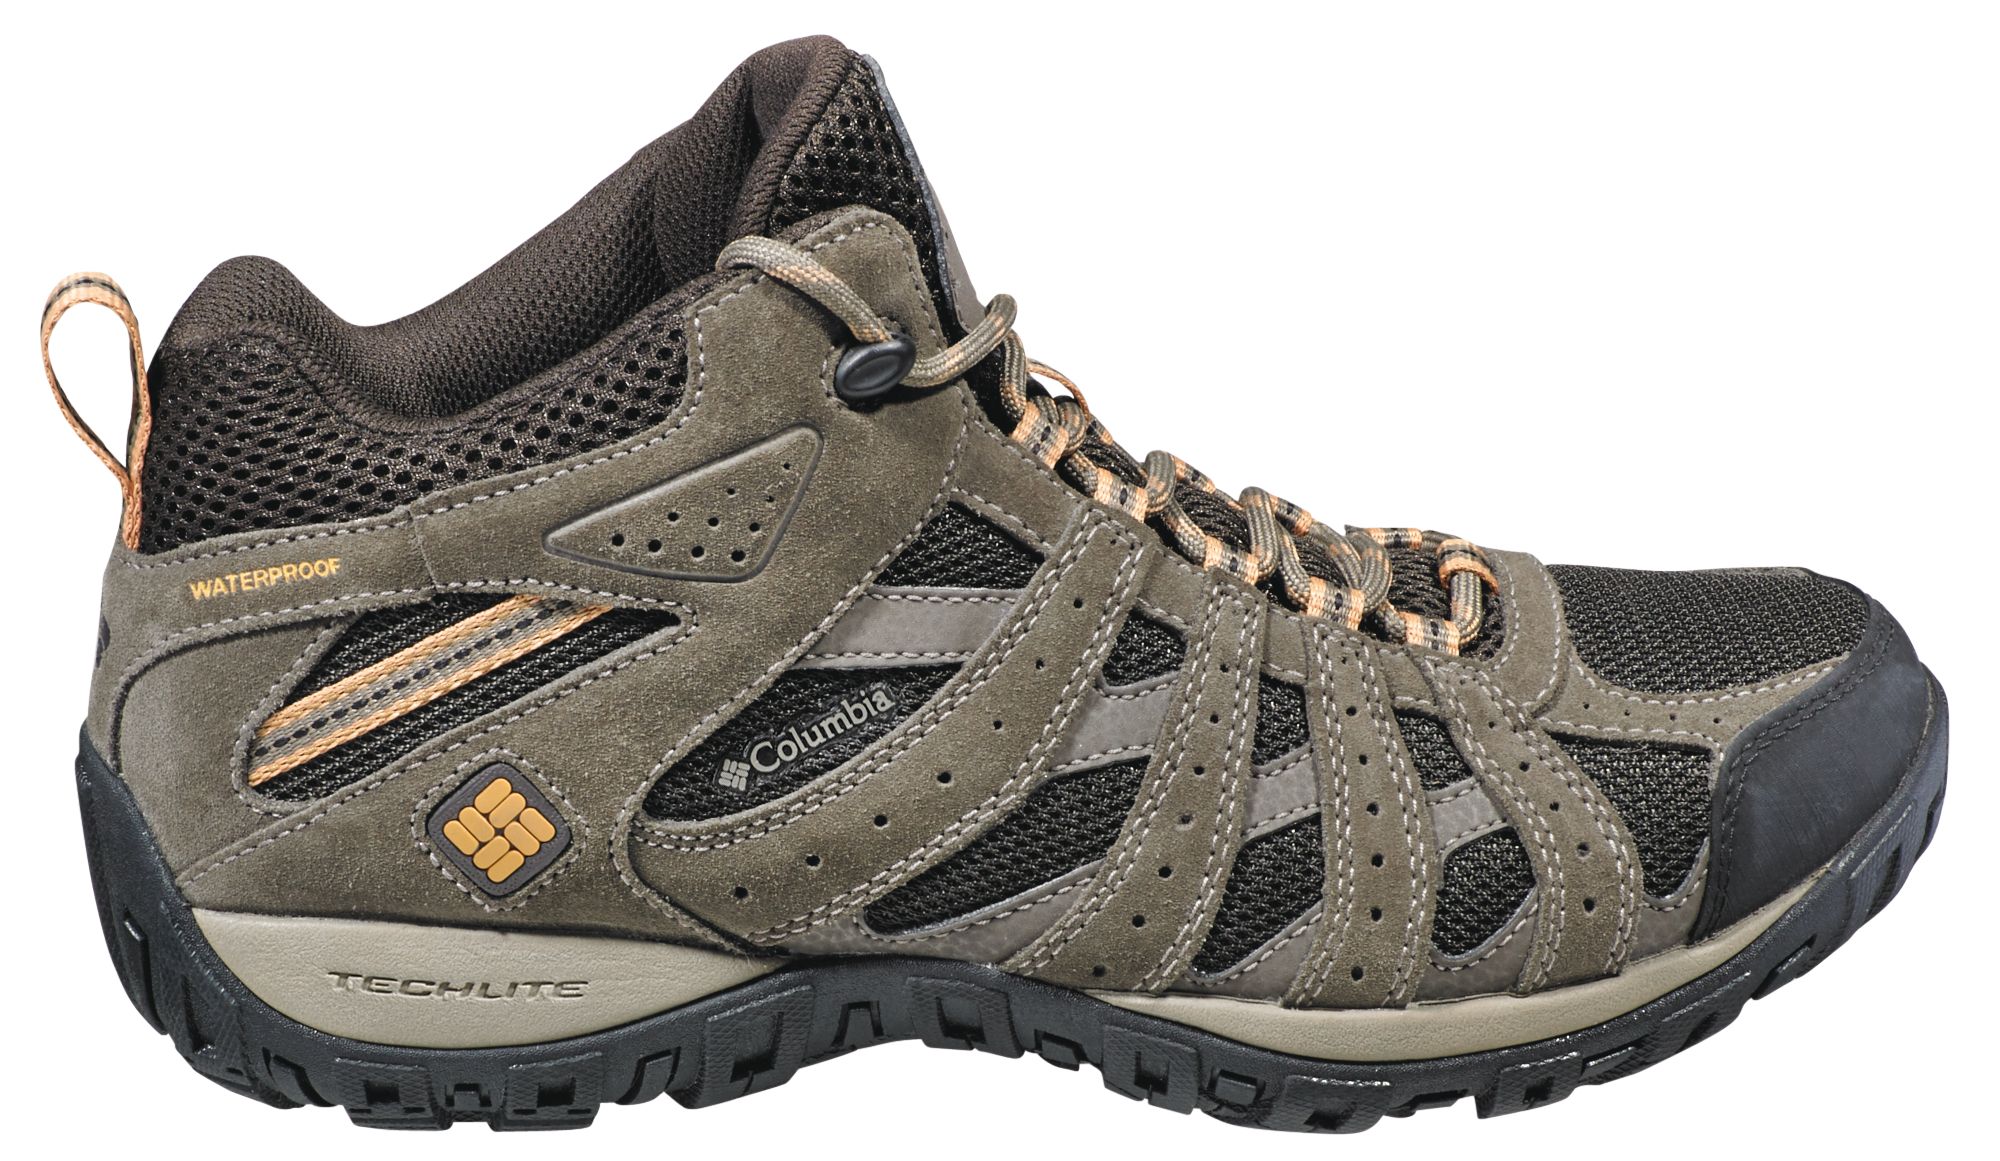 Men's Boots & Outdoor Shoes | DICK'S Sporting Goods